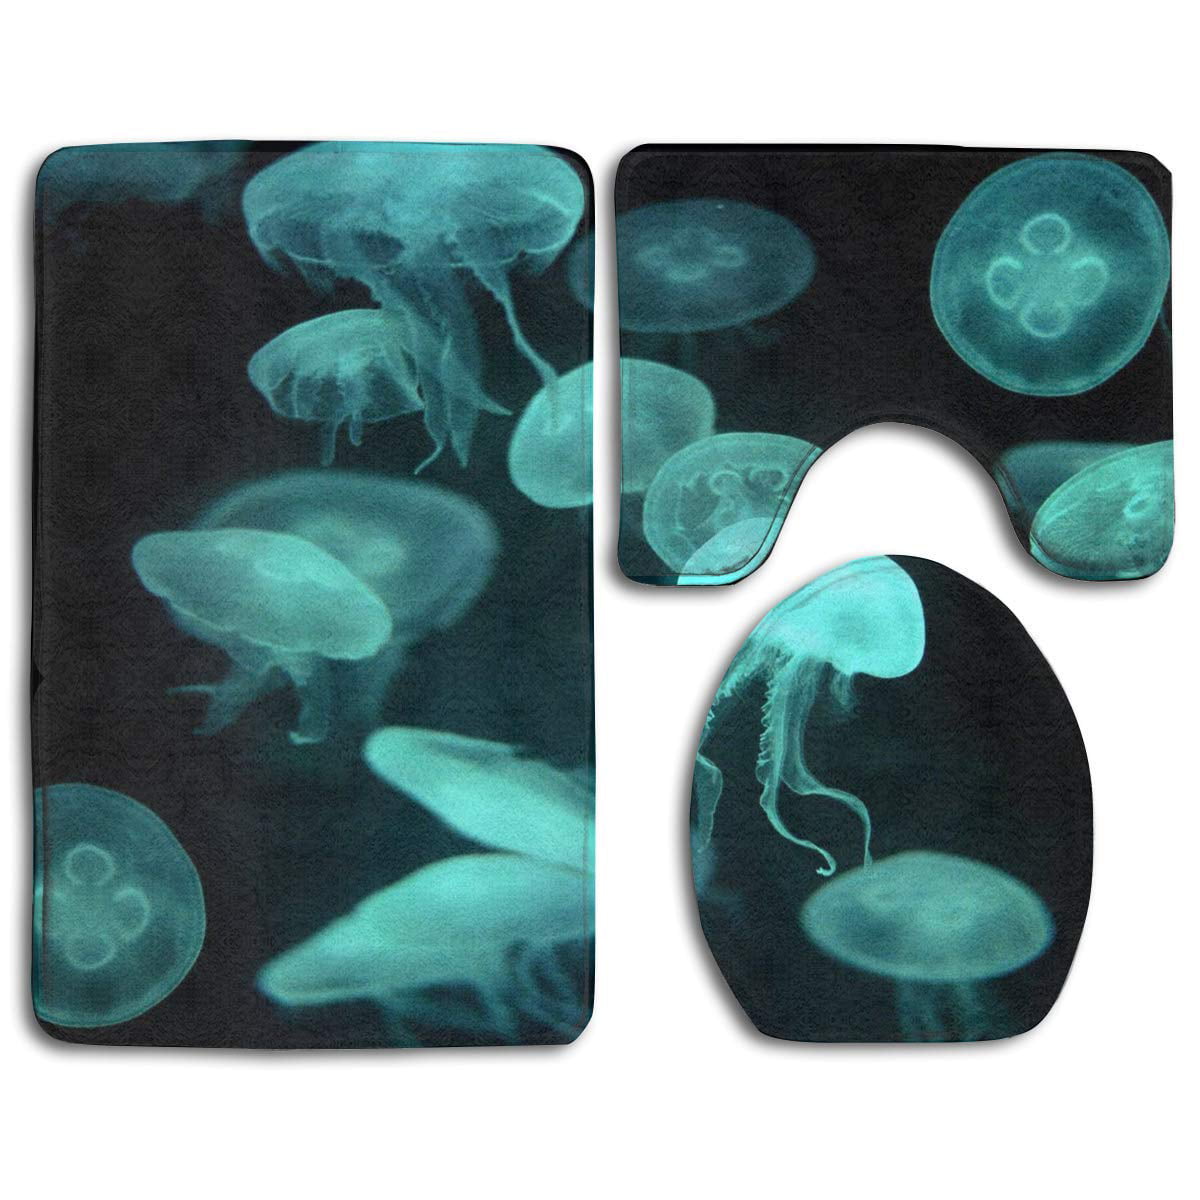 Night Sky Blue Jellyfish Ocean Life Non-slip Bathroom Bath Mat Carpet Door Rugs 